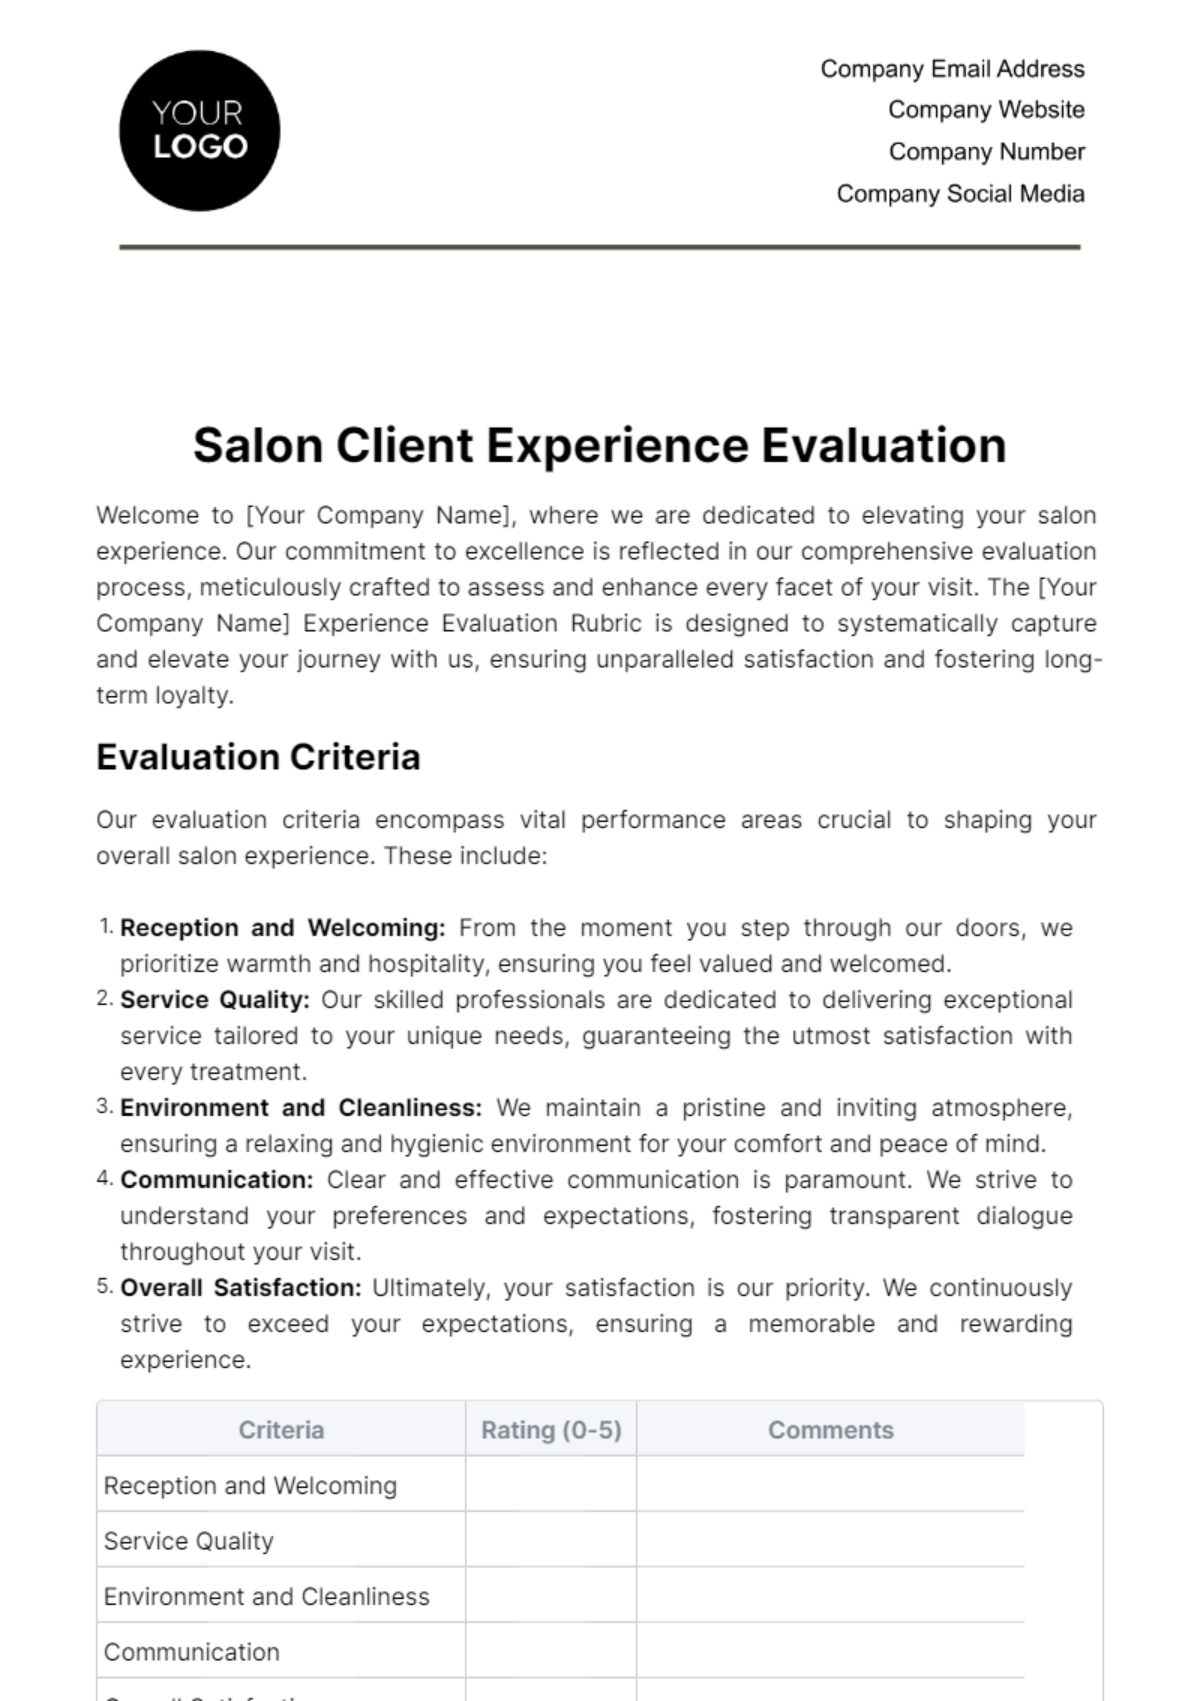 Salon Client Experience Evaluation Template